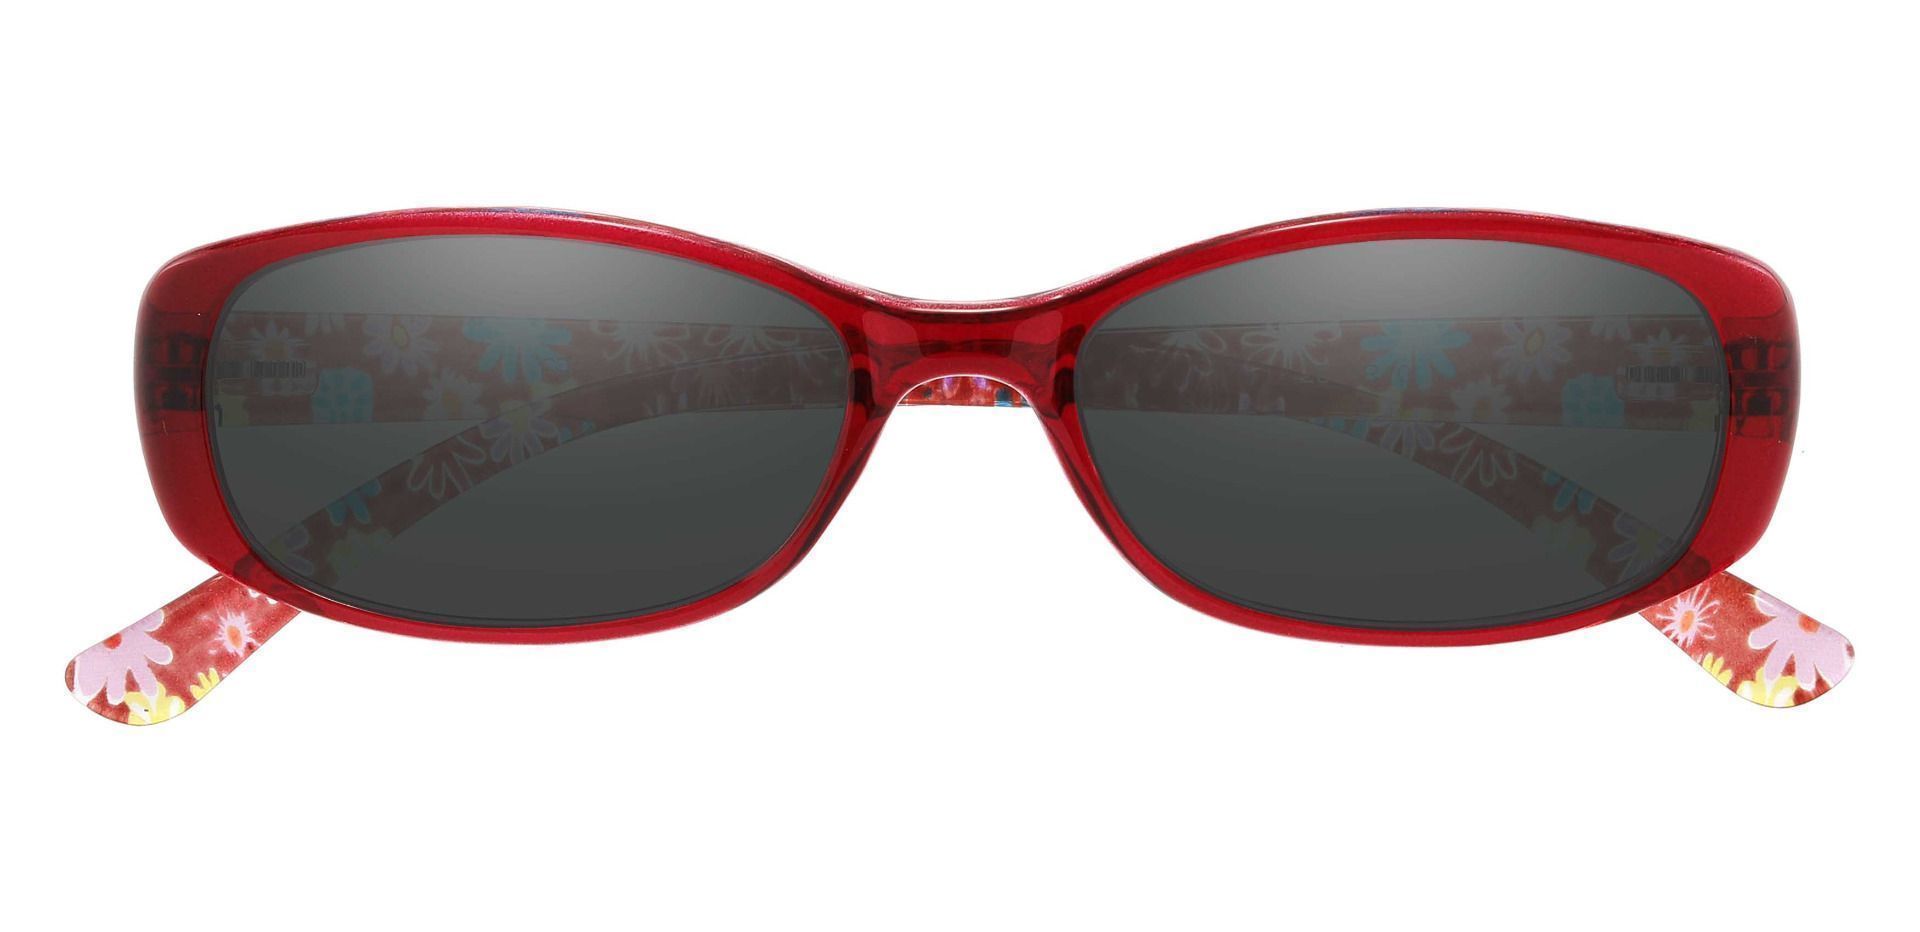 Bethesda Rectangle Prescription Sunglasses - Red Frame With Gray Lenses